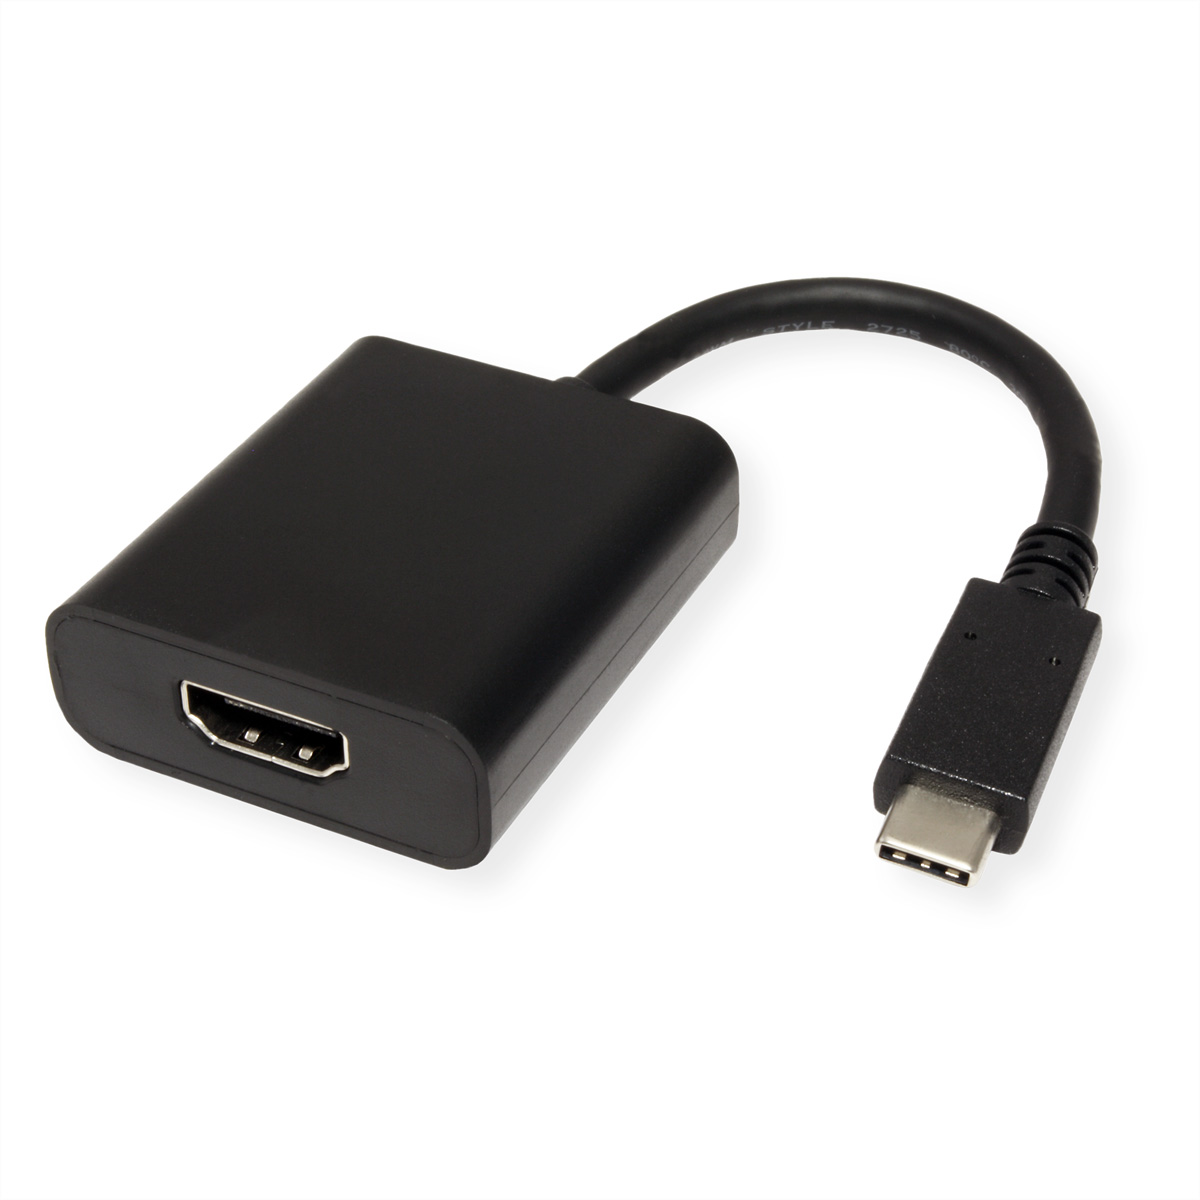 HDMI VGA + schwarz + USB-Grafikadapter, Display - Adapter C DVI Typ VALUE USB